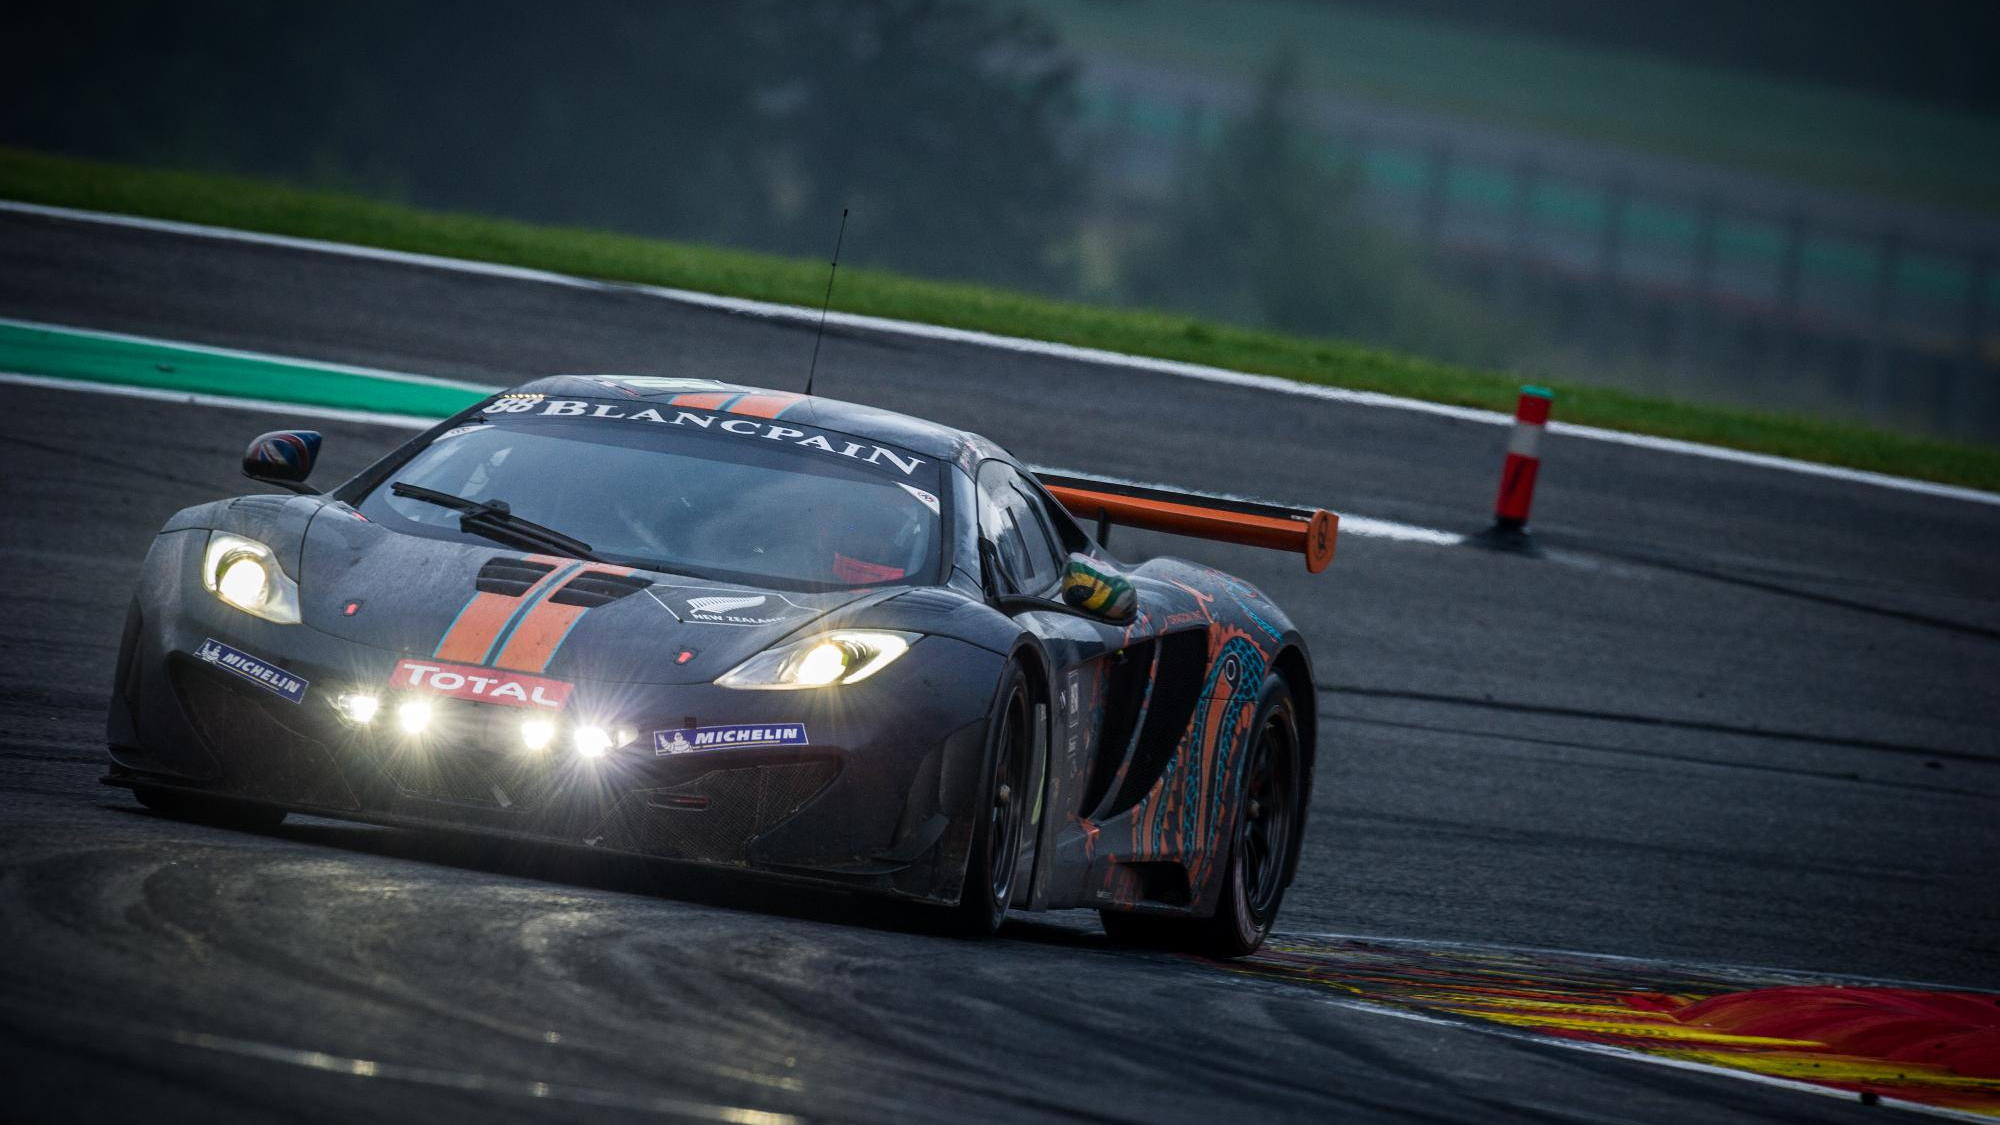 The McLaren 12C GT3, on track